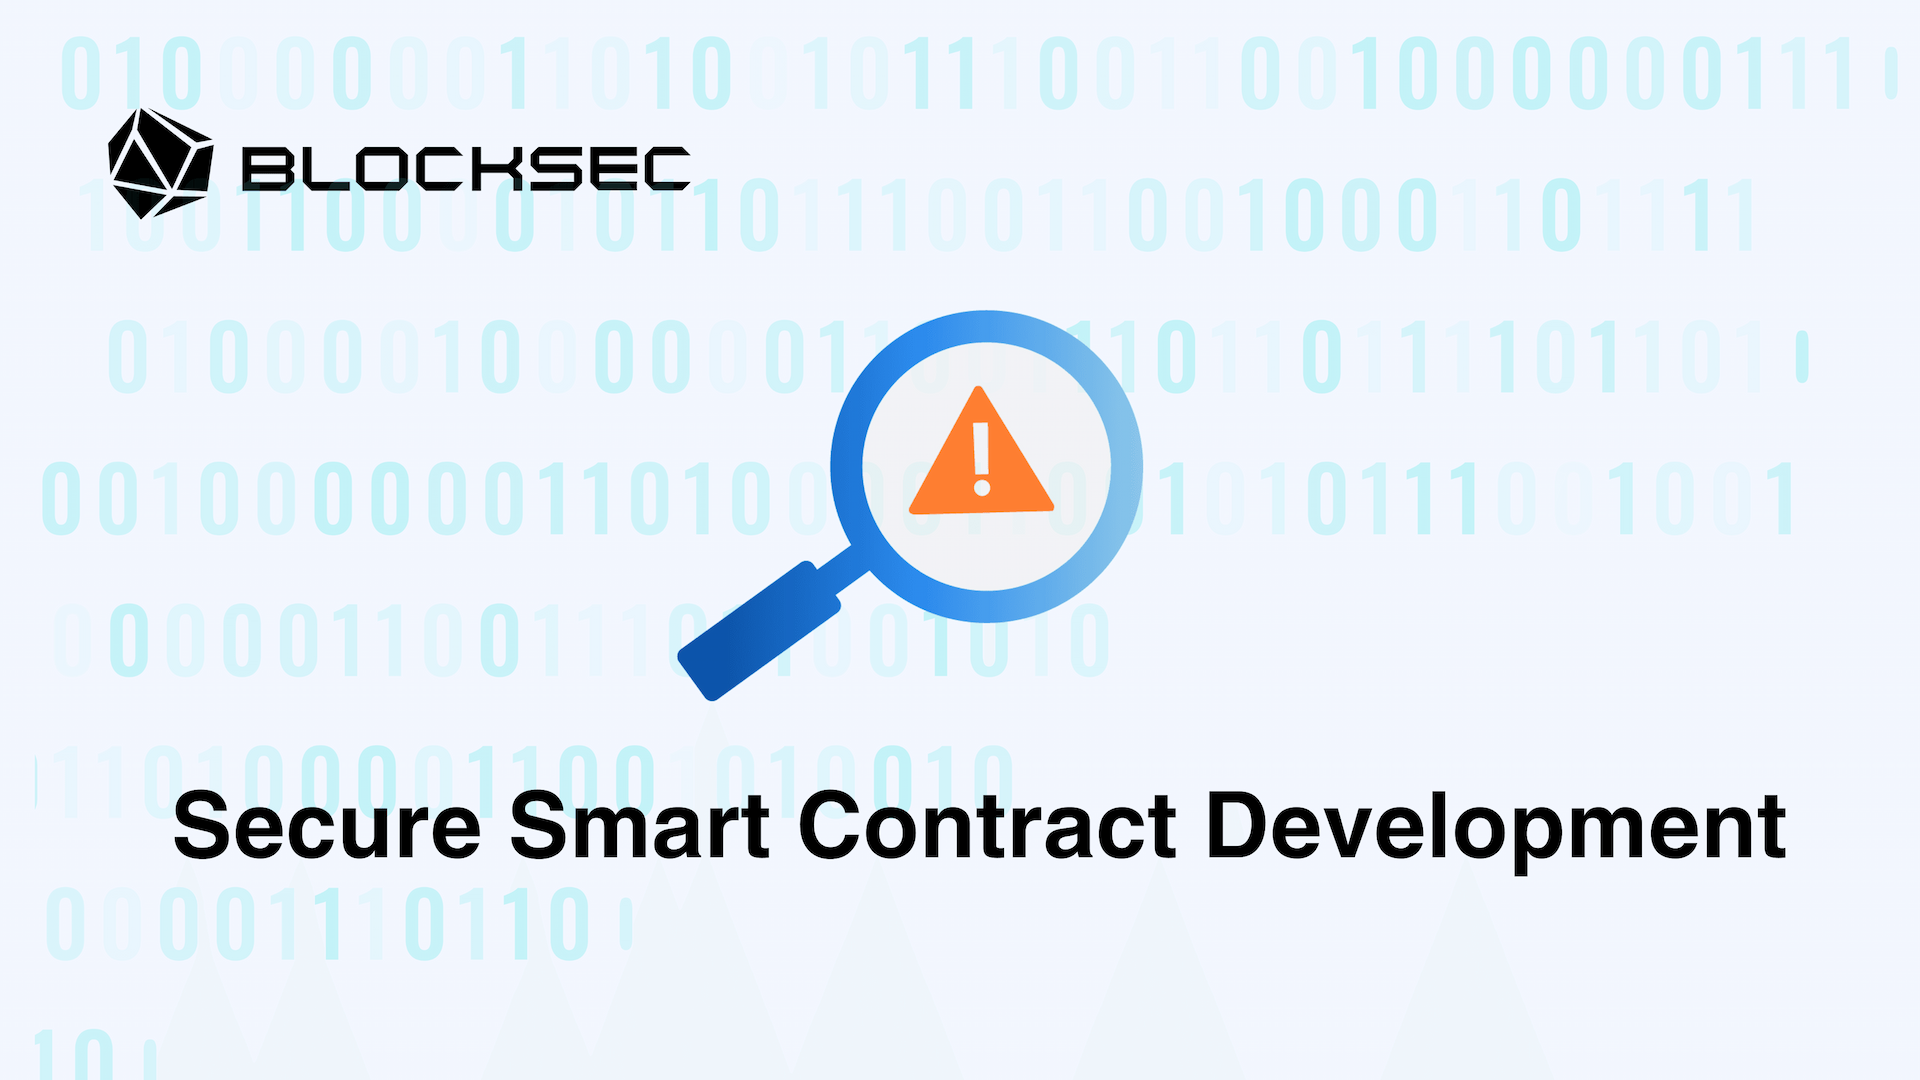 Lead in: Secure Smart Contract Development